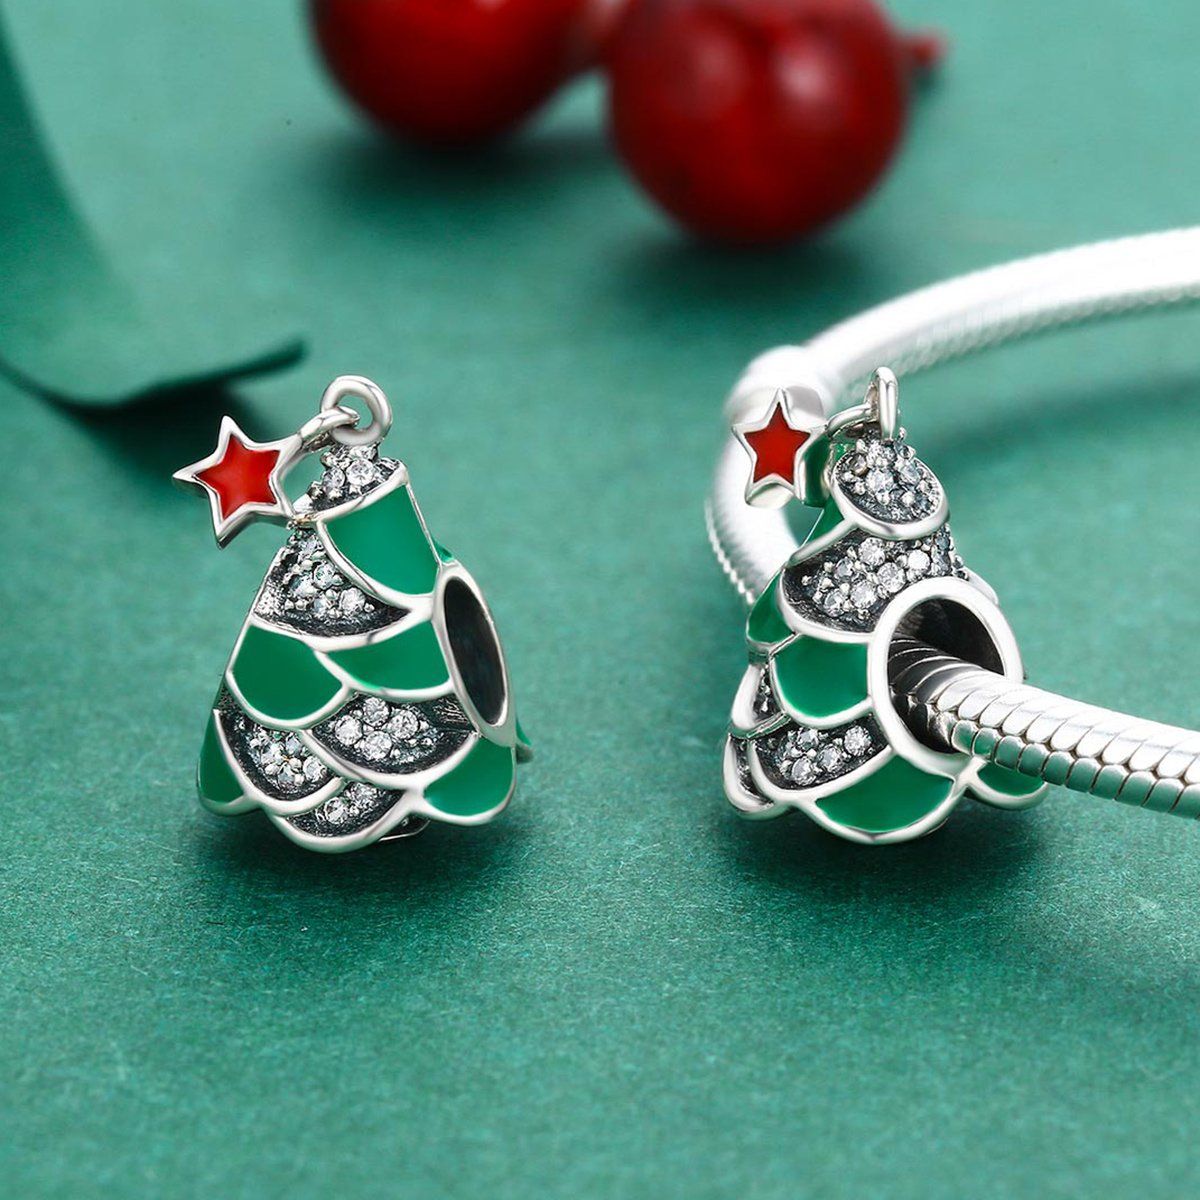 Sterling 925 silver charm the gift tree bead pendant fits Pandora charm and European charm bracelet Xaxe.com